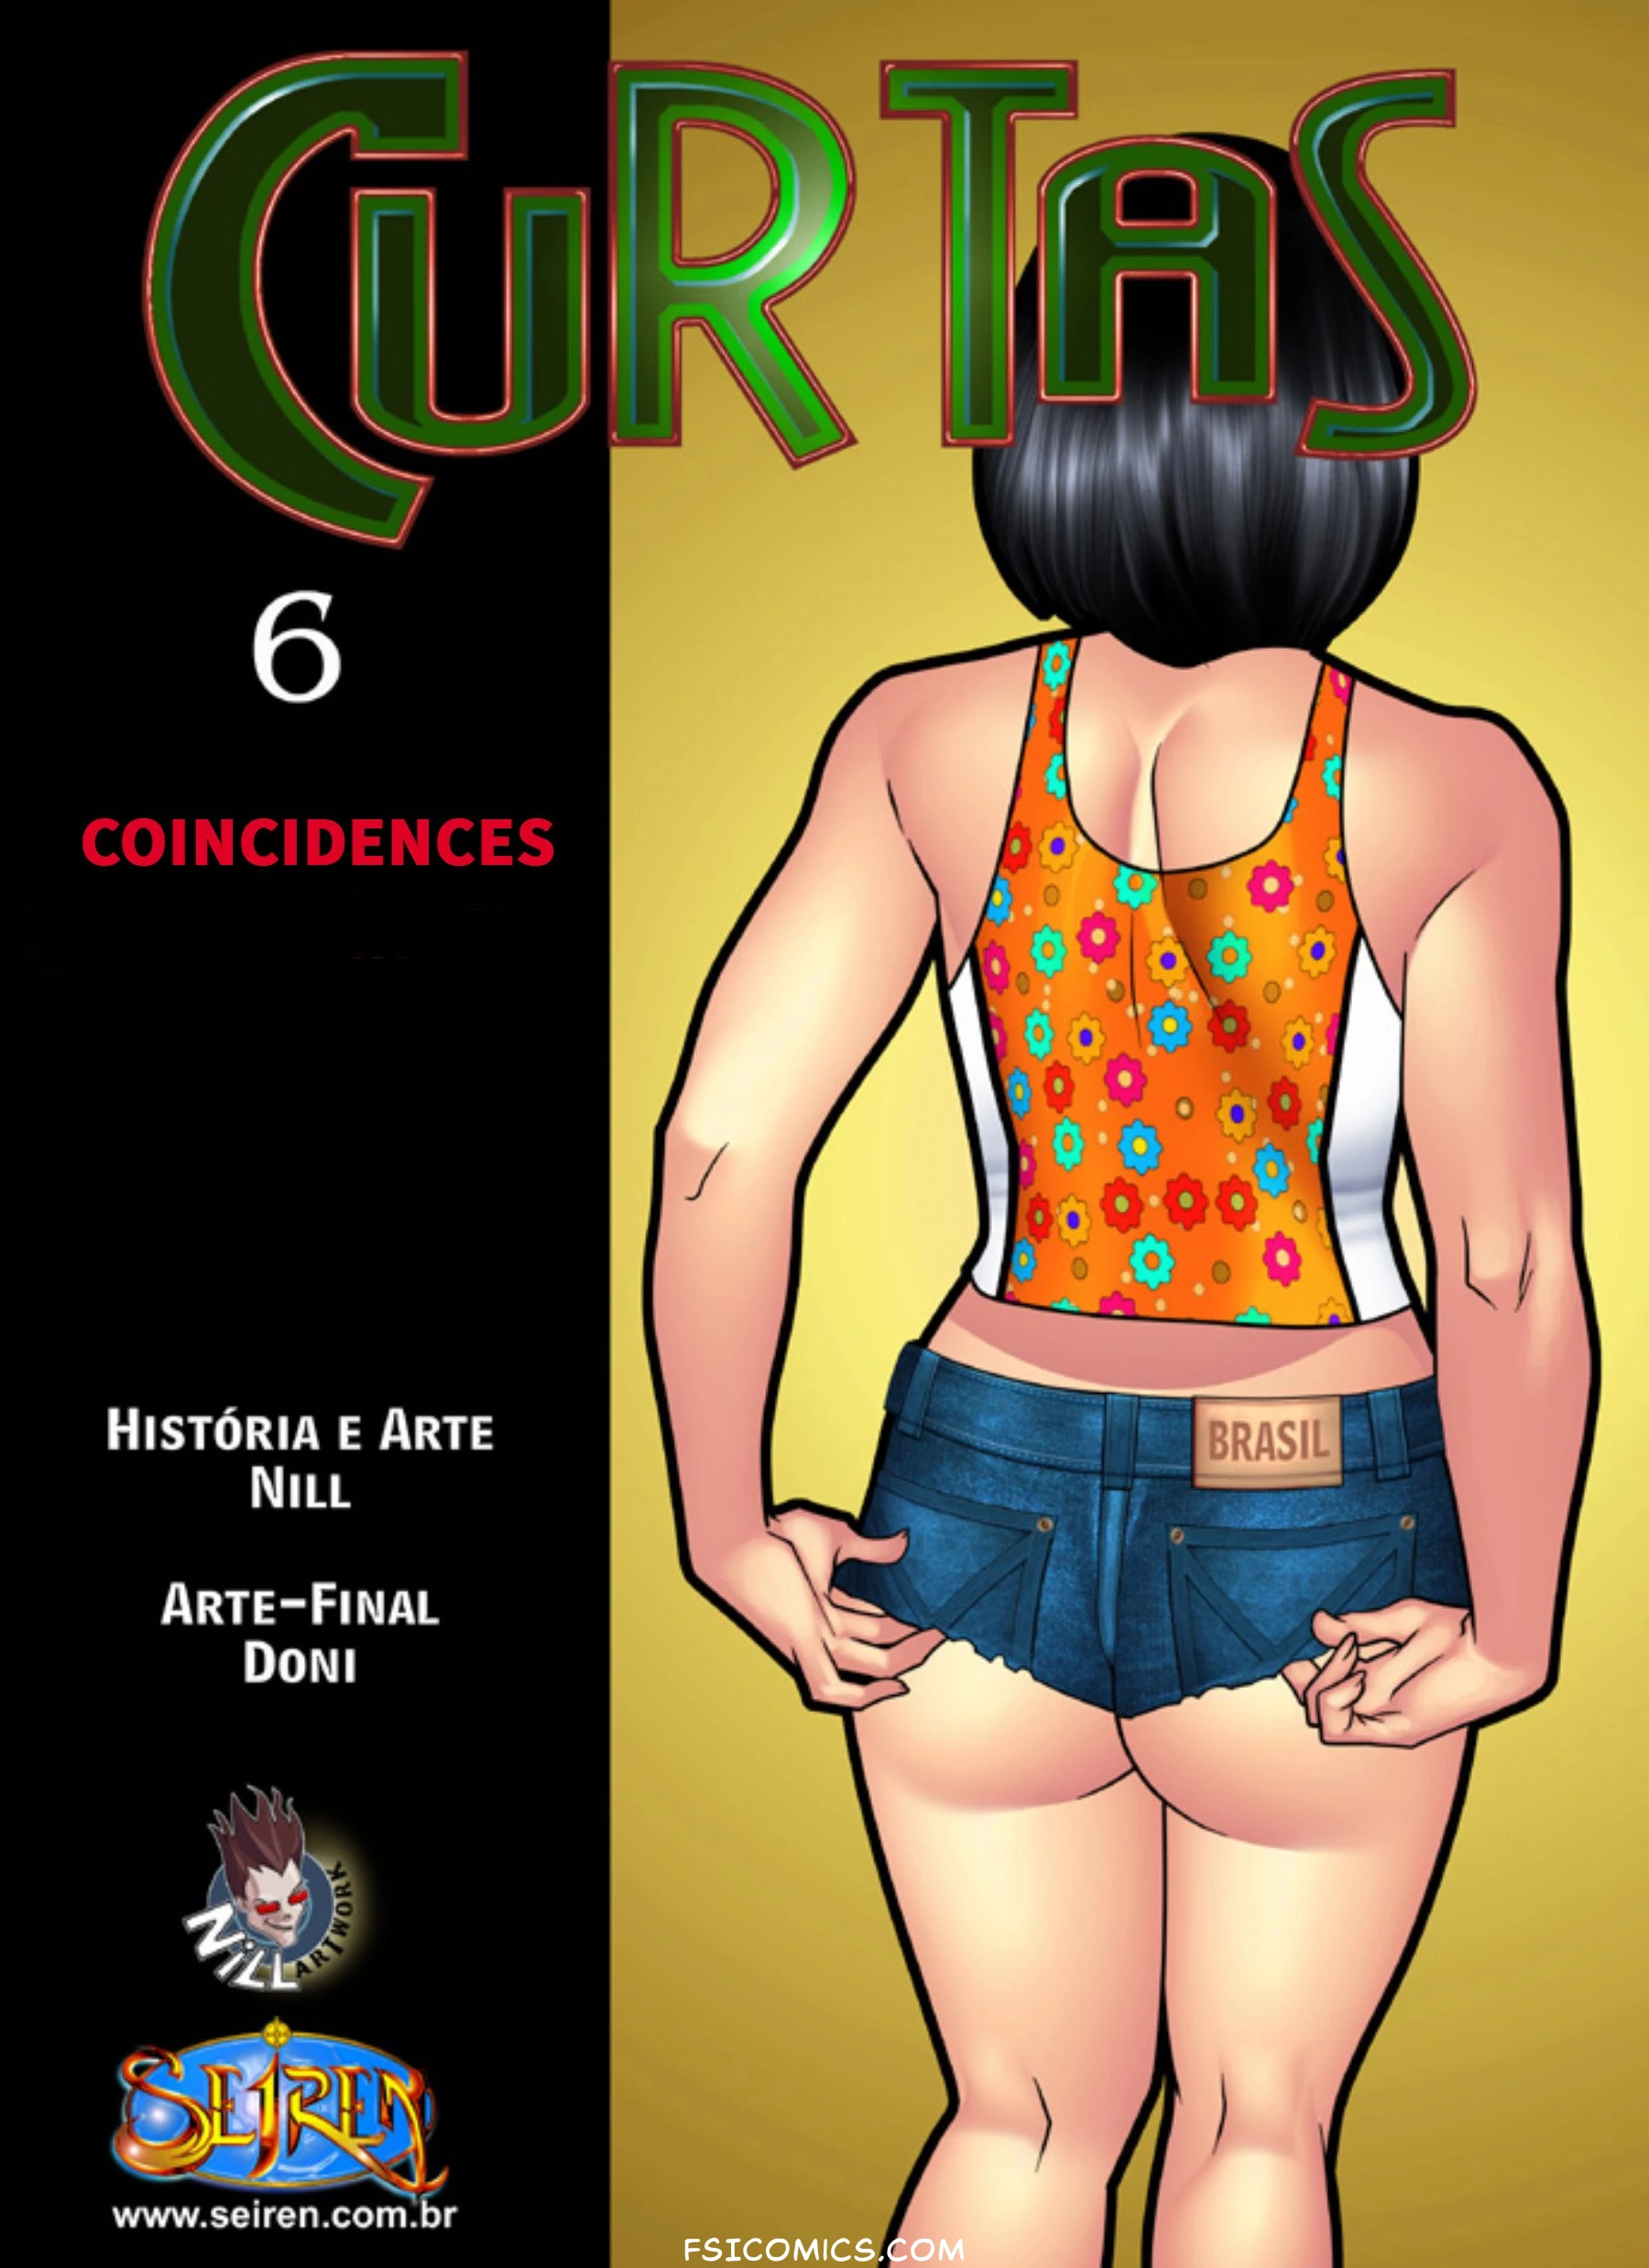 Curtas Chapter 6 - Coincidences – Seiren - 39 - FSIComics